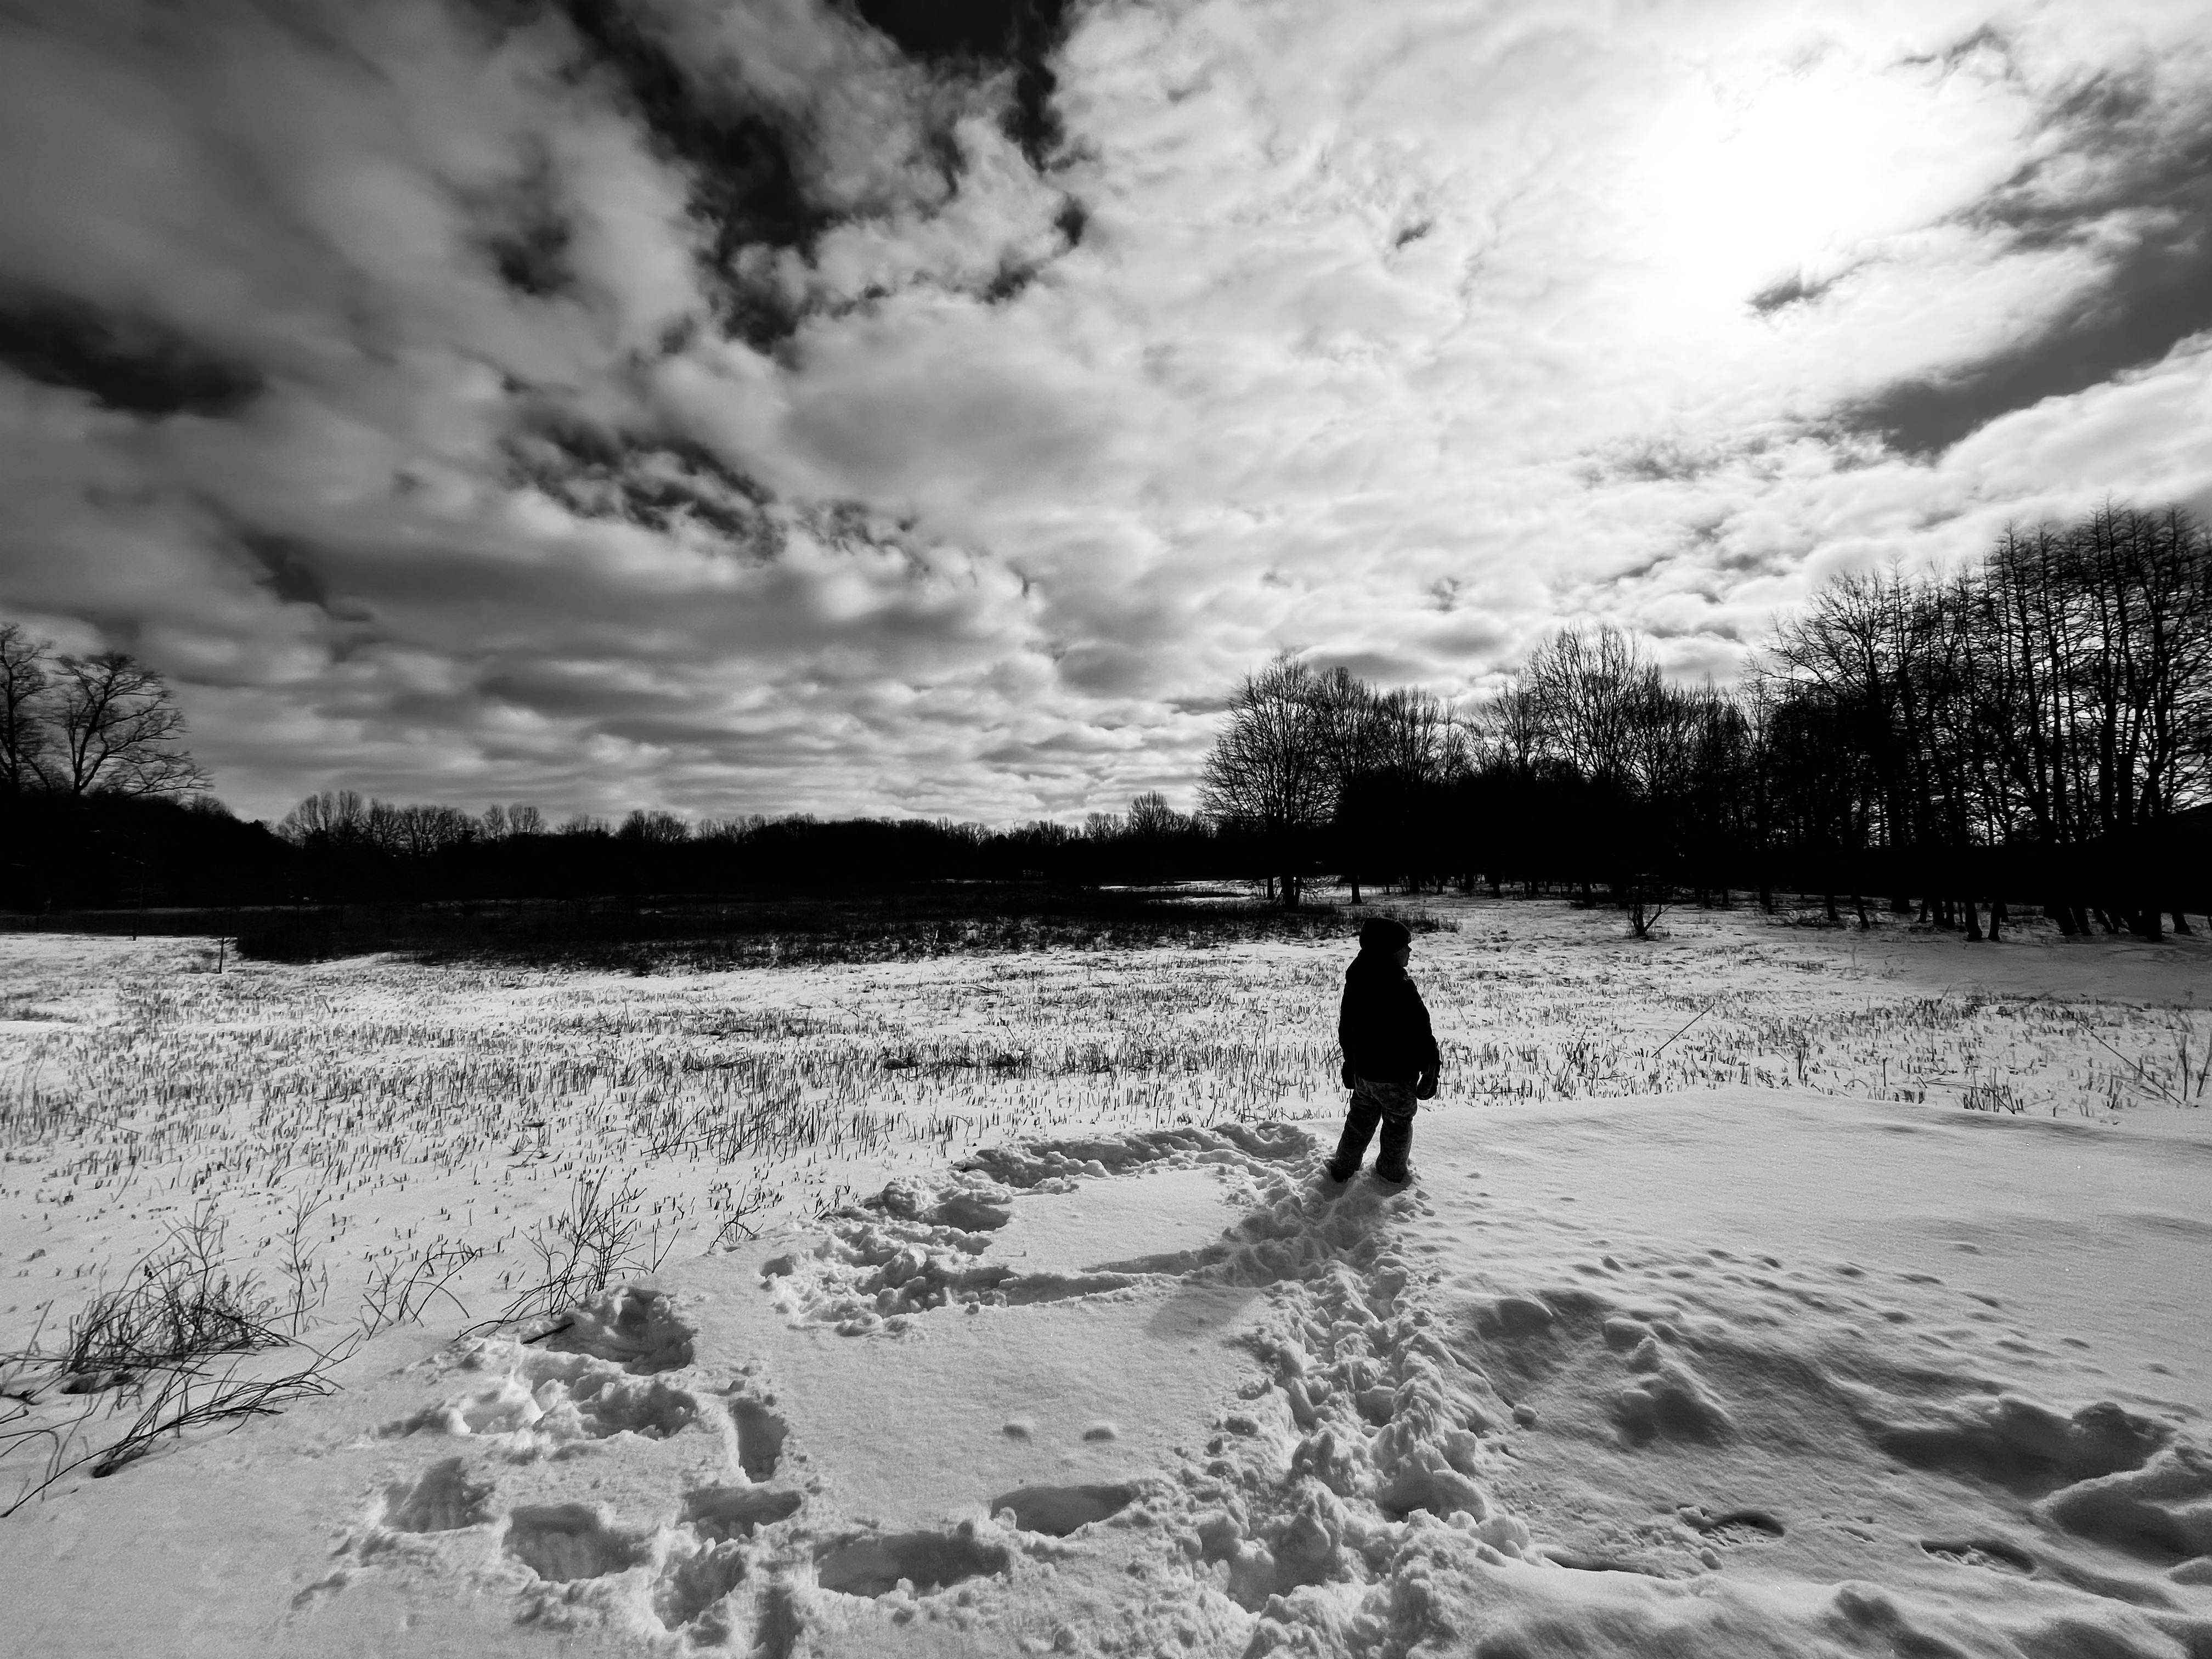 Jordan's oldest child, Cohen, examining a snowy landscape.